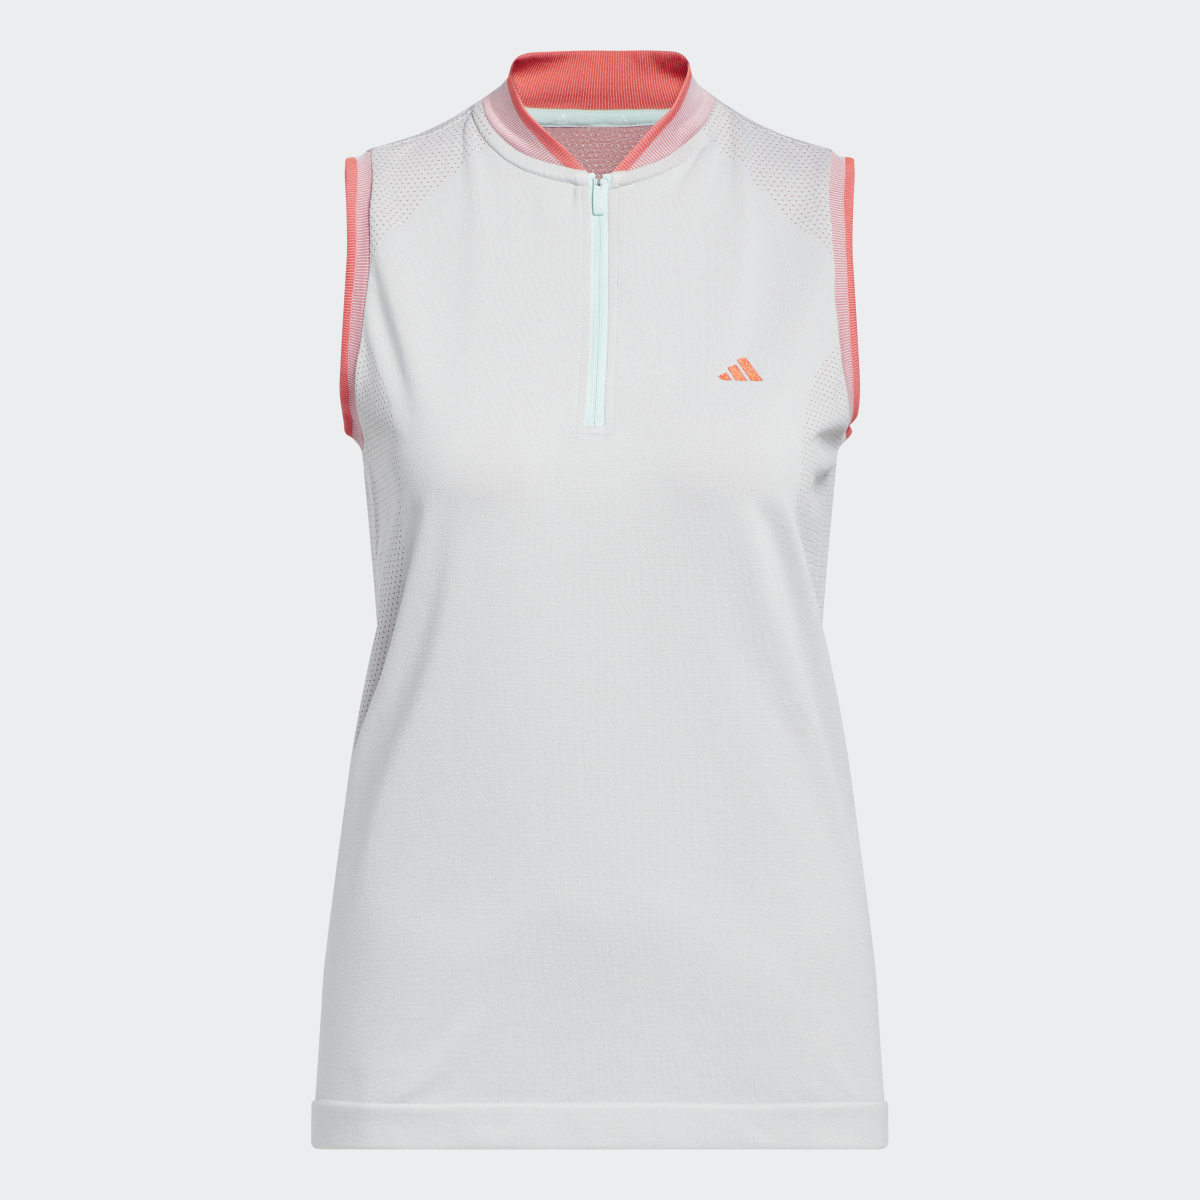 Adidas Ultimate365 Tour PRIMEKNIT Sleeveless Polo Shirt. 5